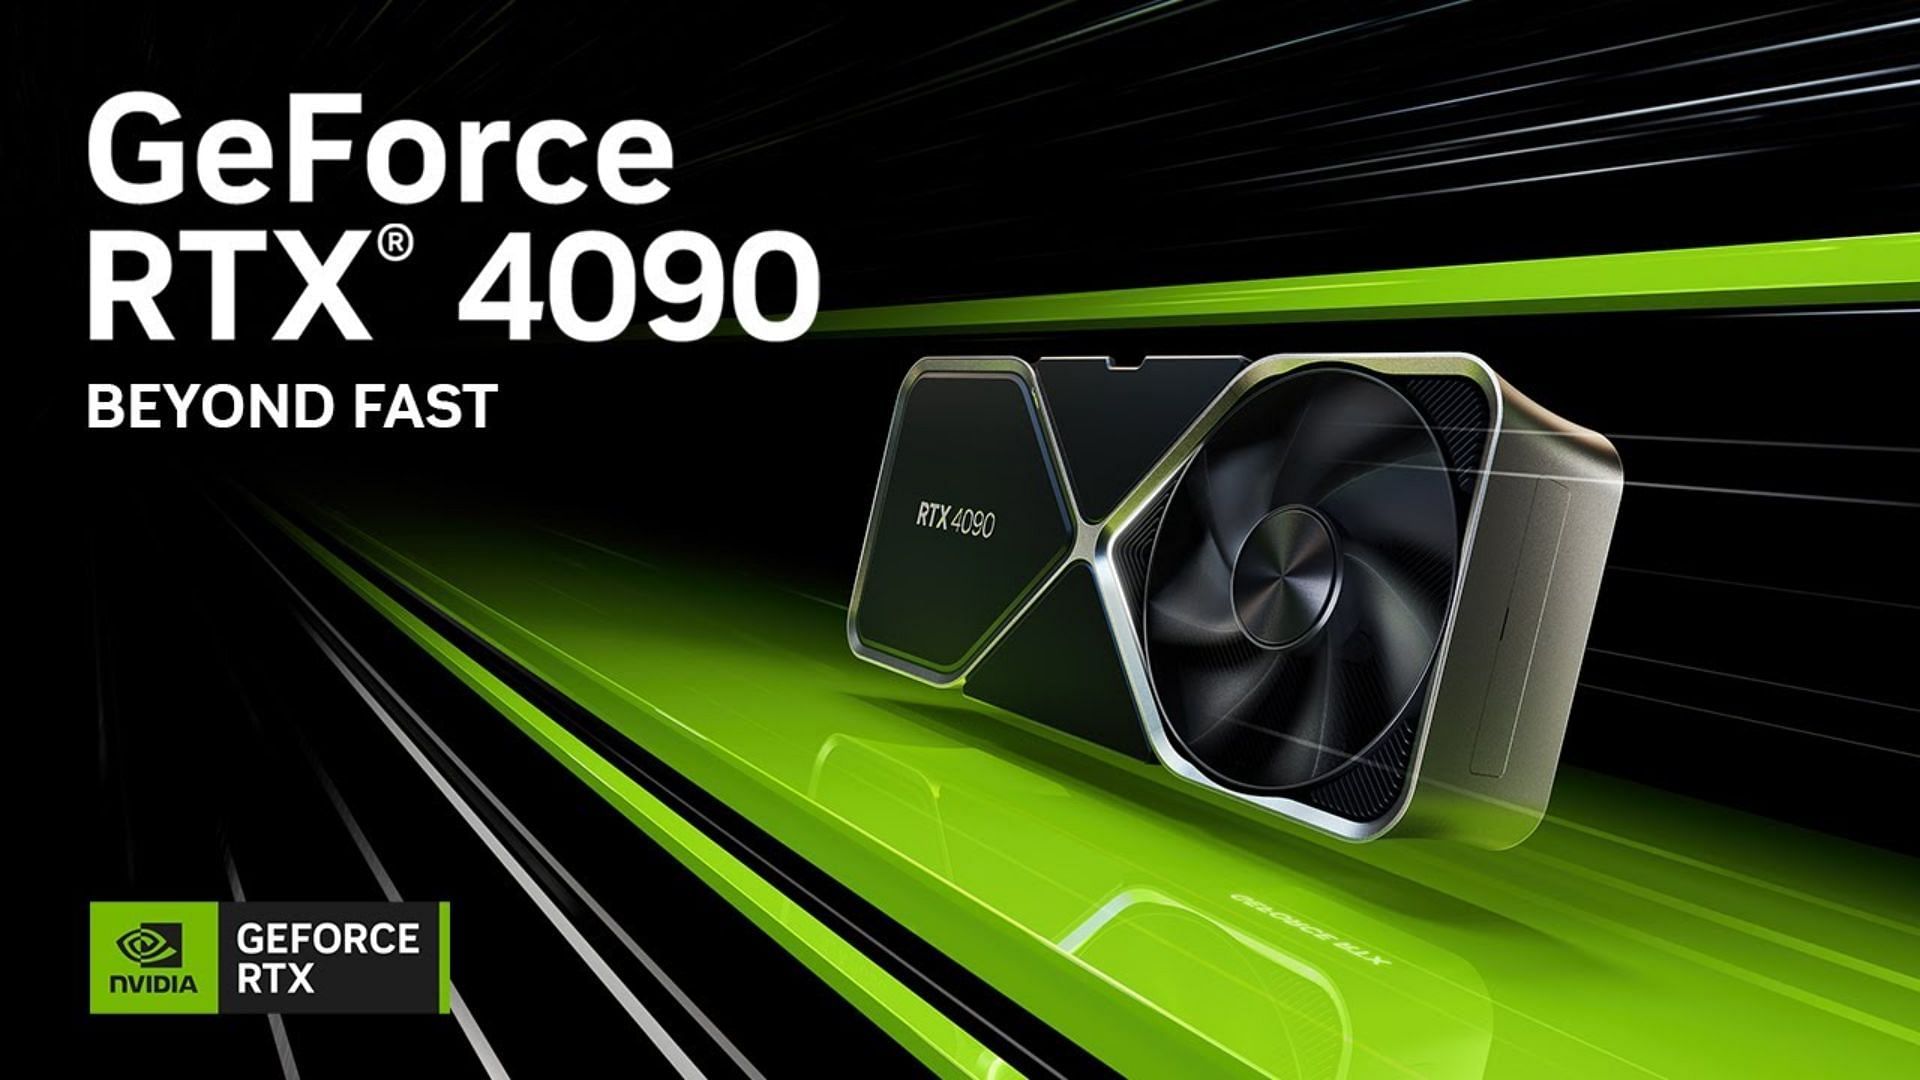 The Geforce RTX 4090 (Image via Nvidia)